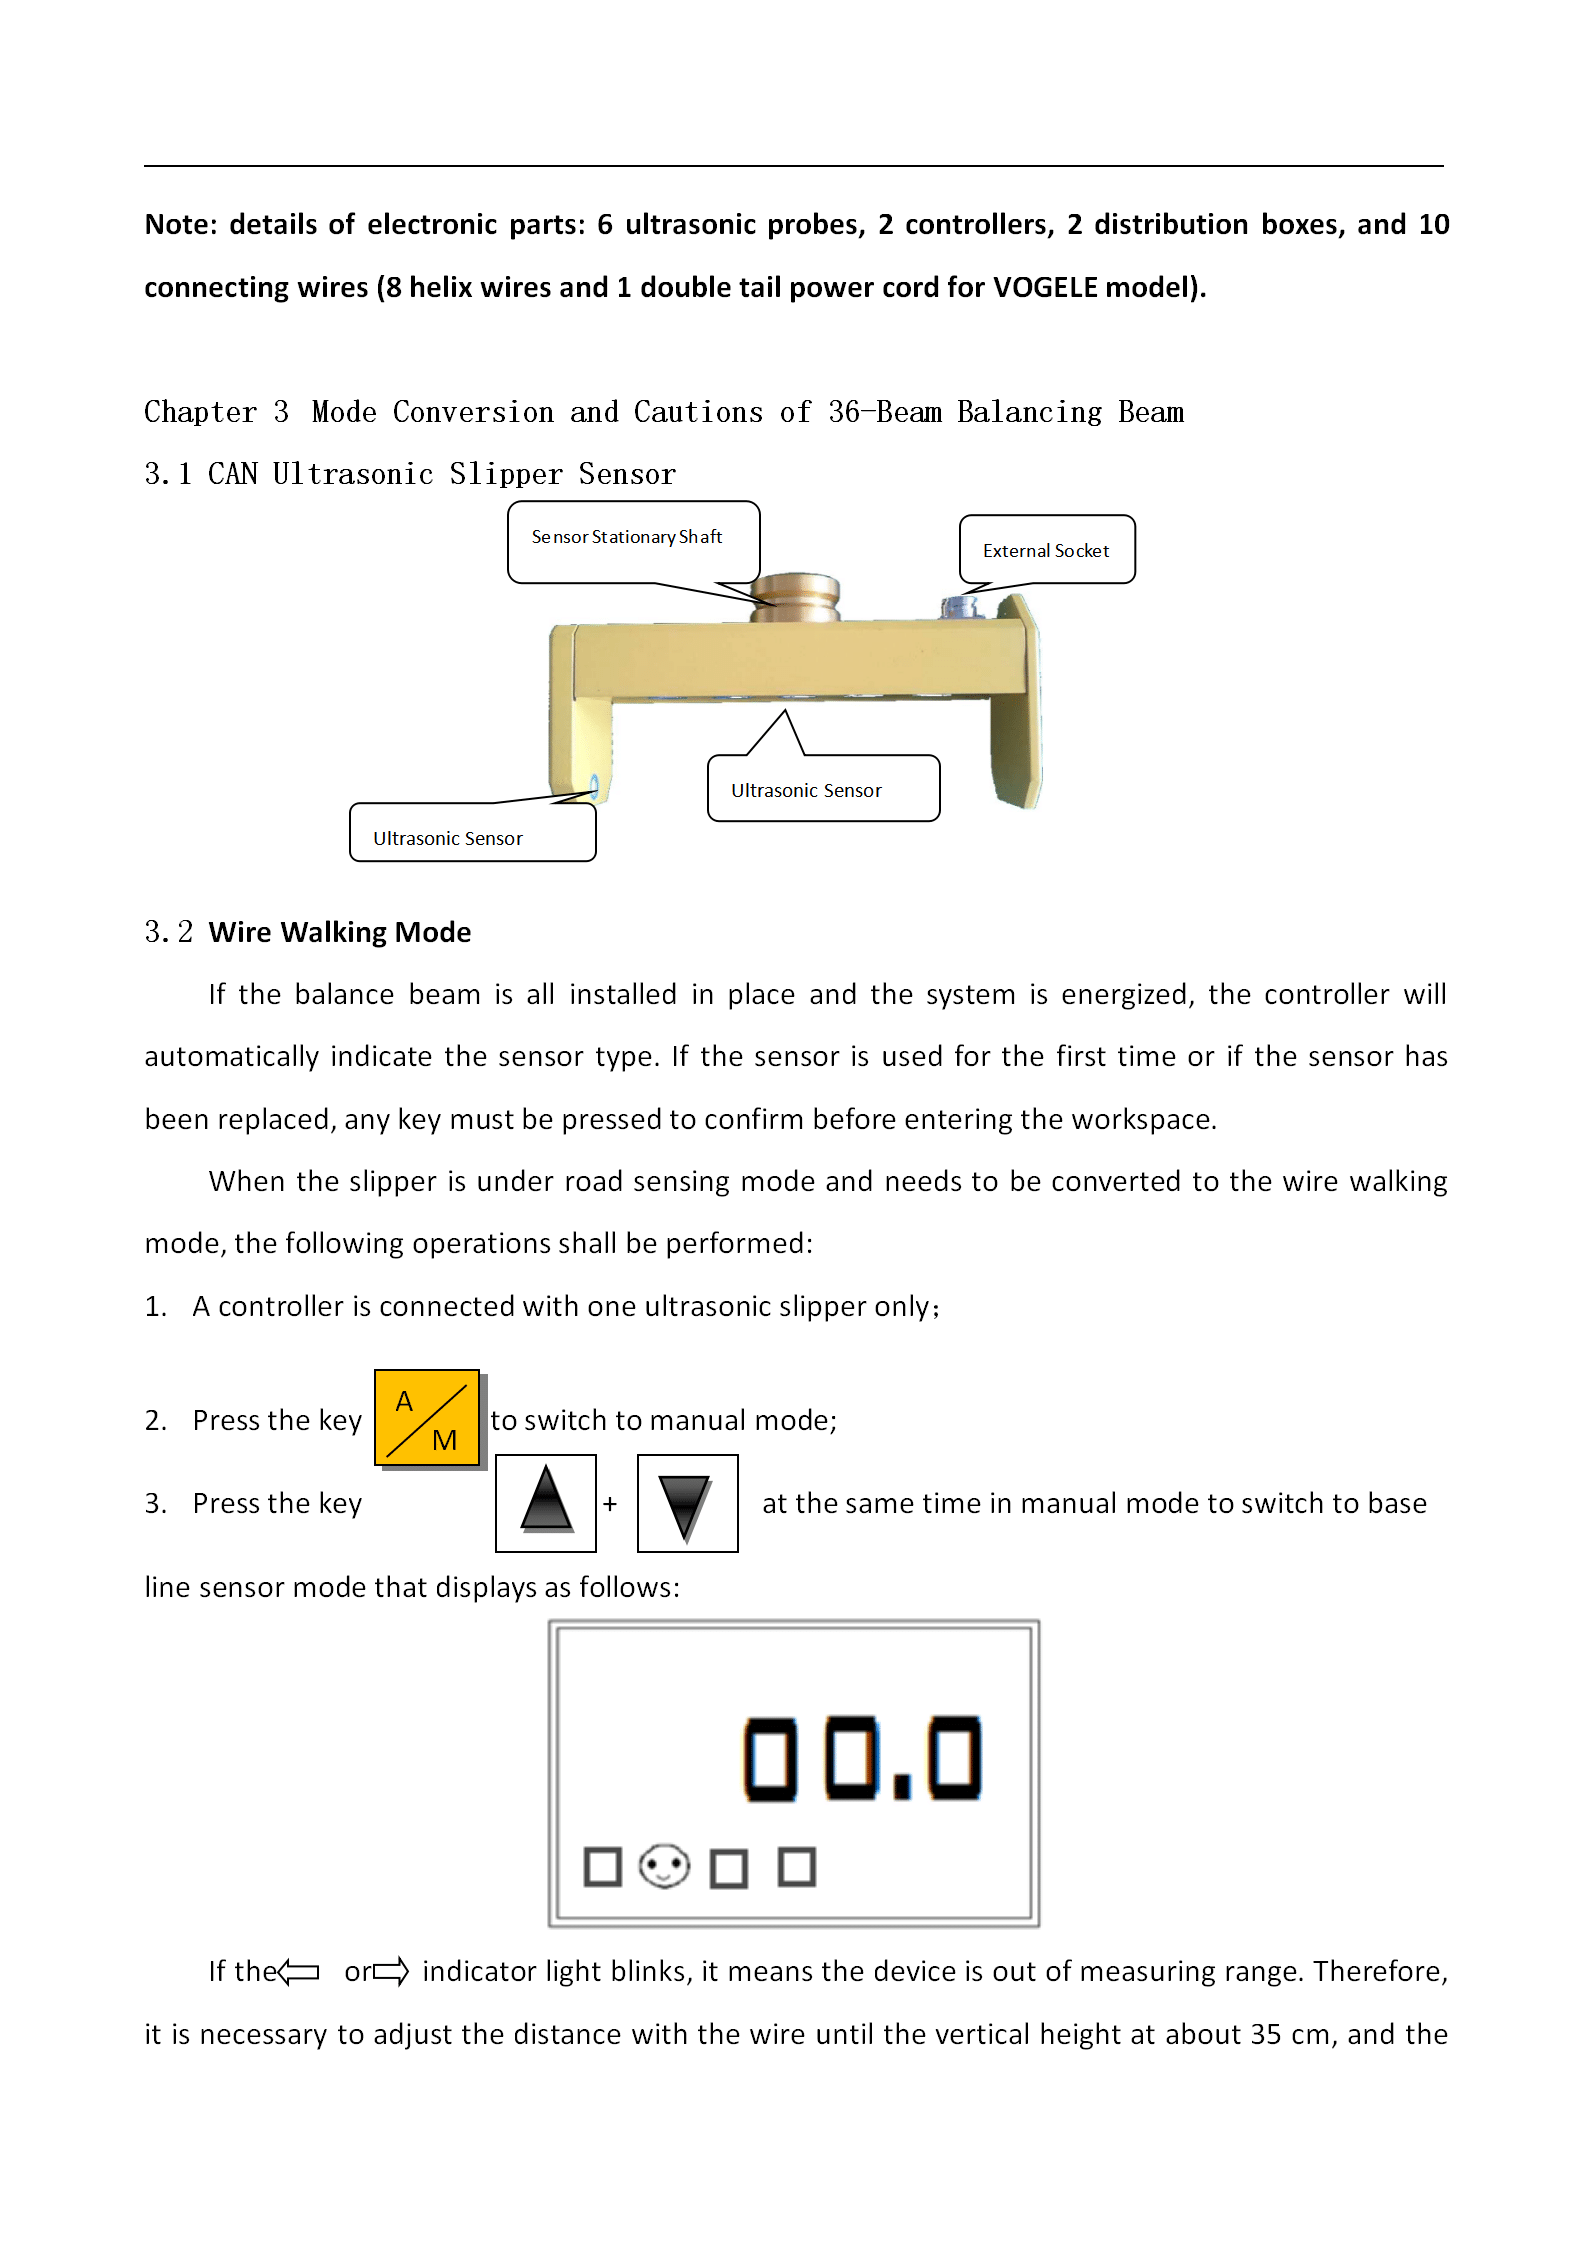 Operation Manual for the Ultrasonic Balance Beam_12